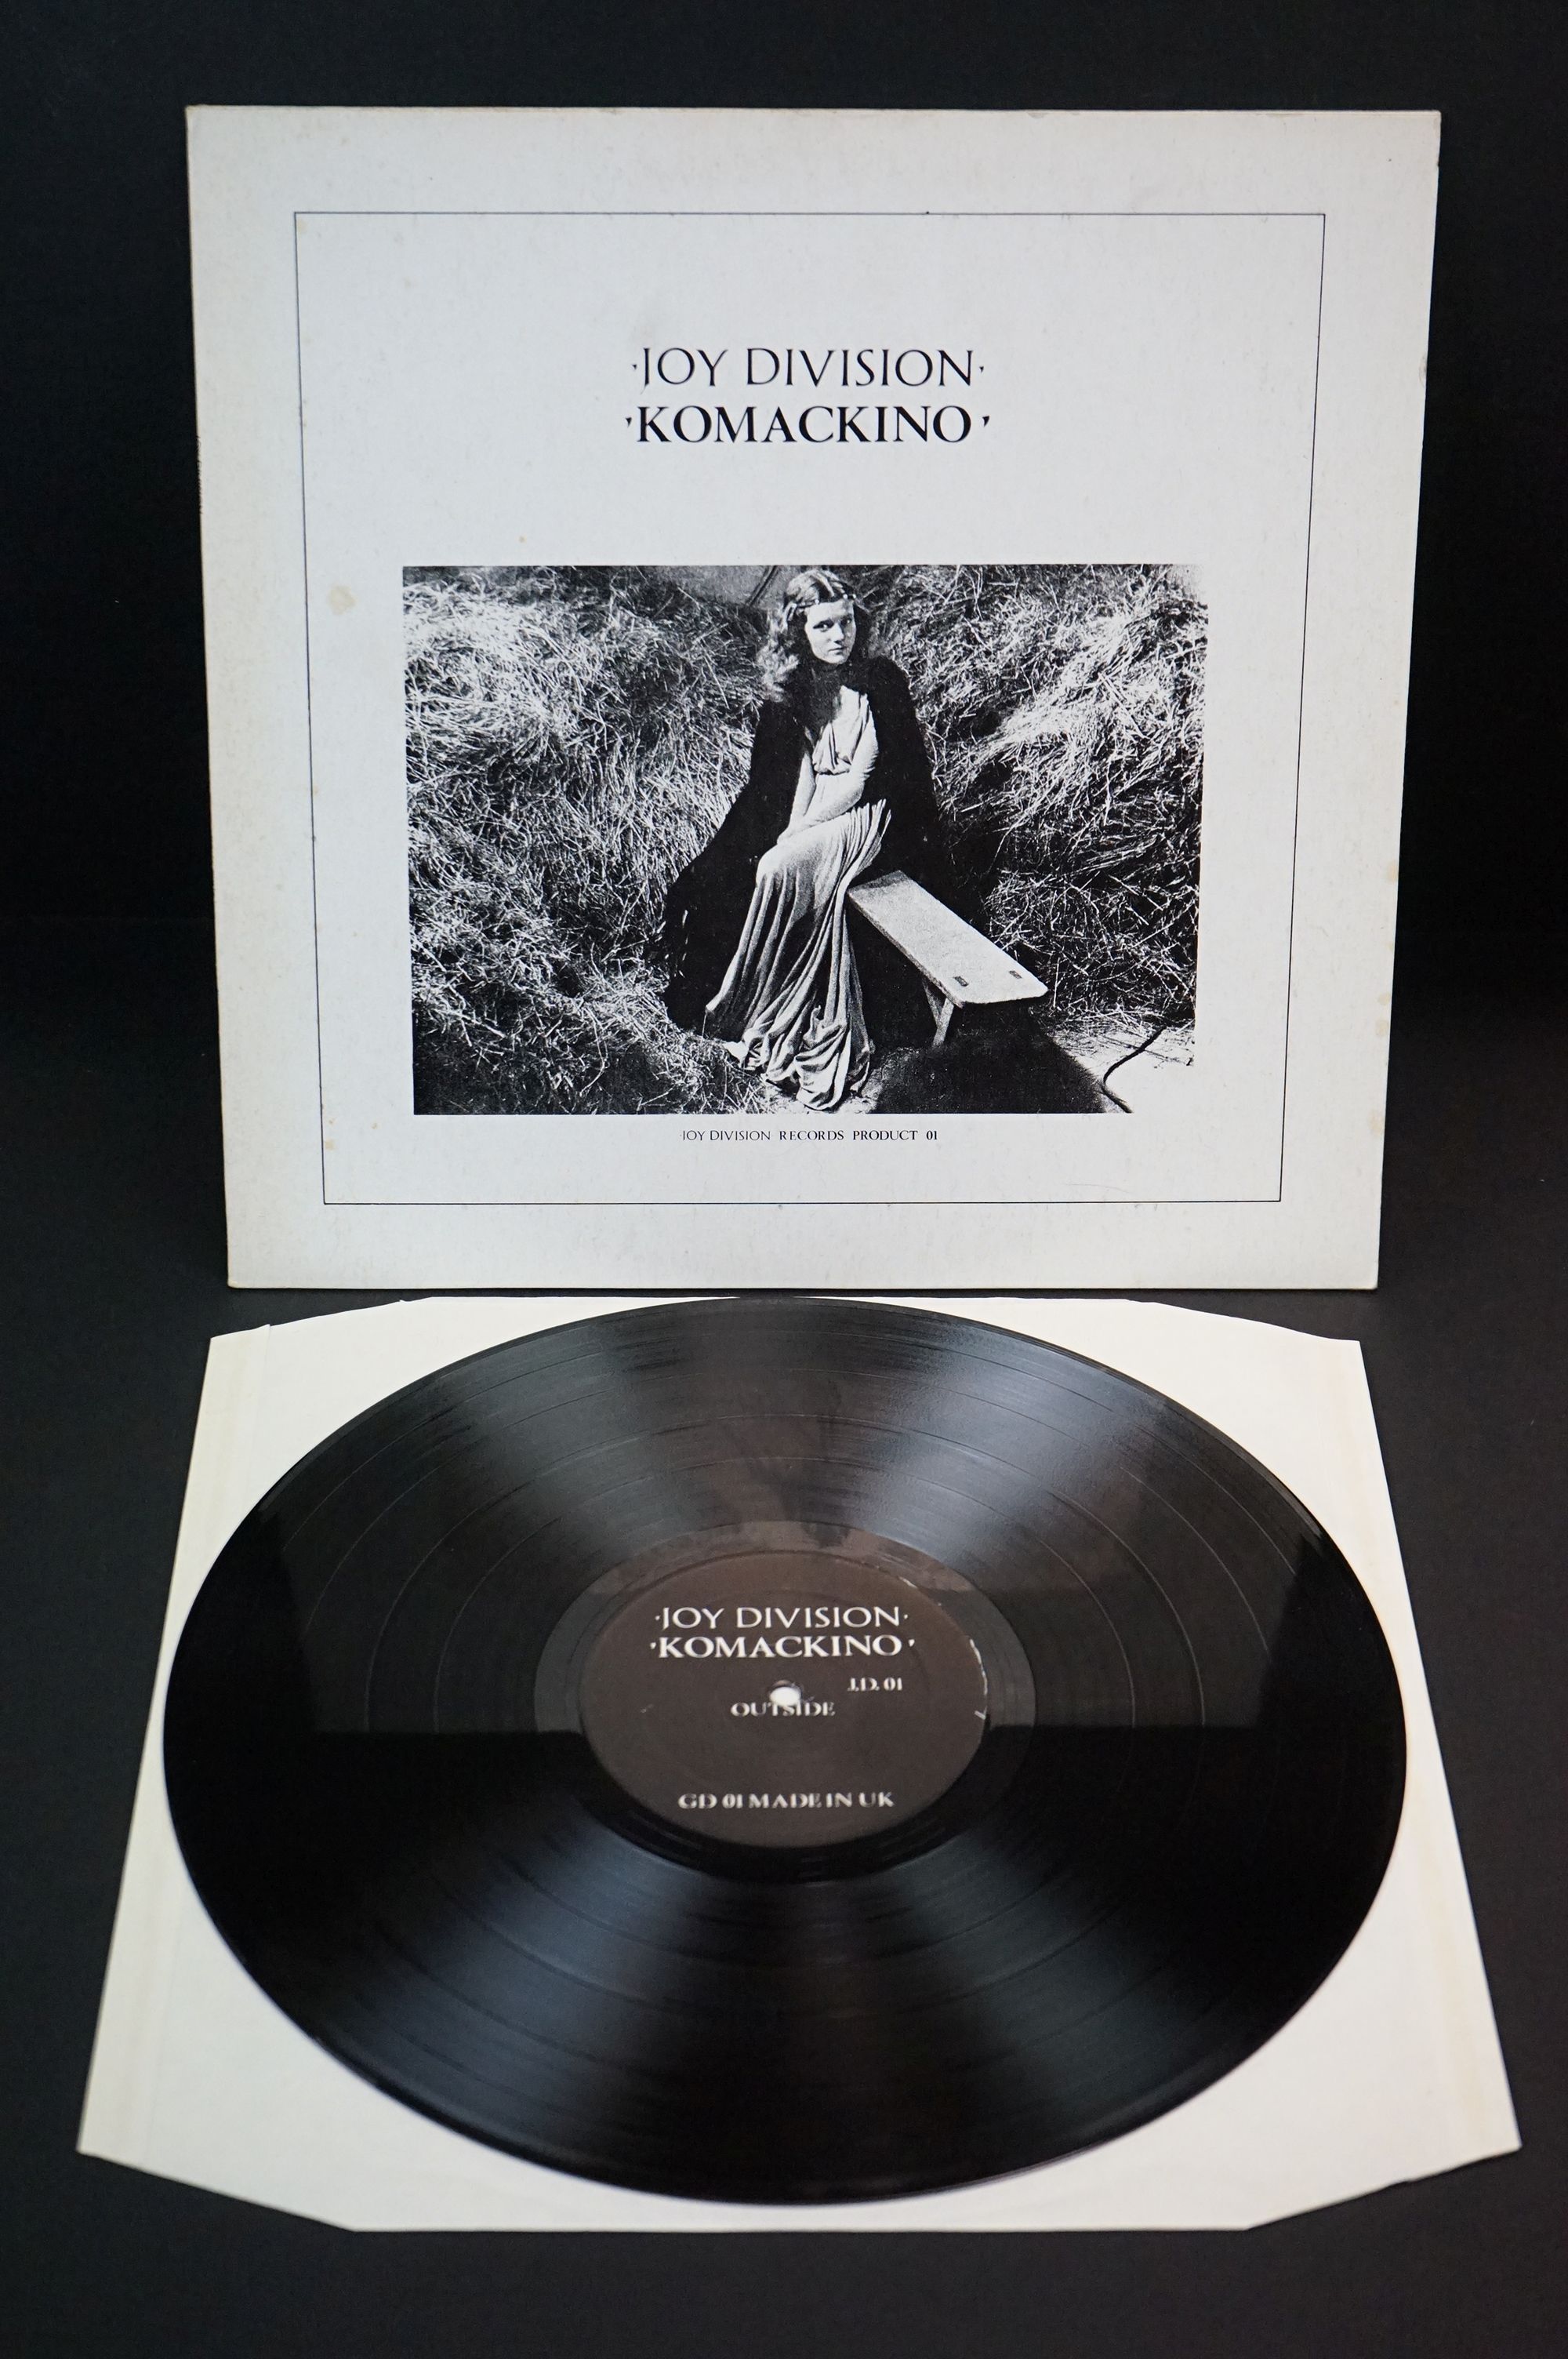 Vinyl – 2 rare Joy Division private pressing albums to include Joy Division – Komackino (Original - Image 2 of 12